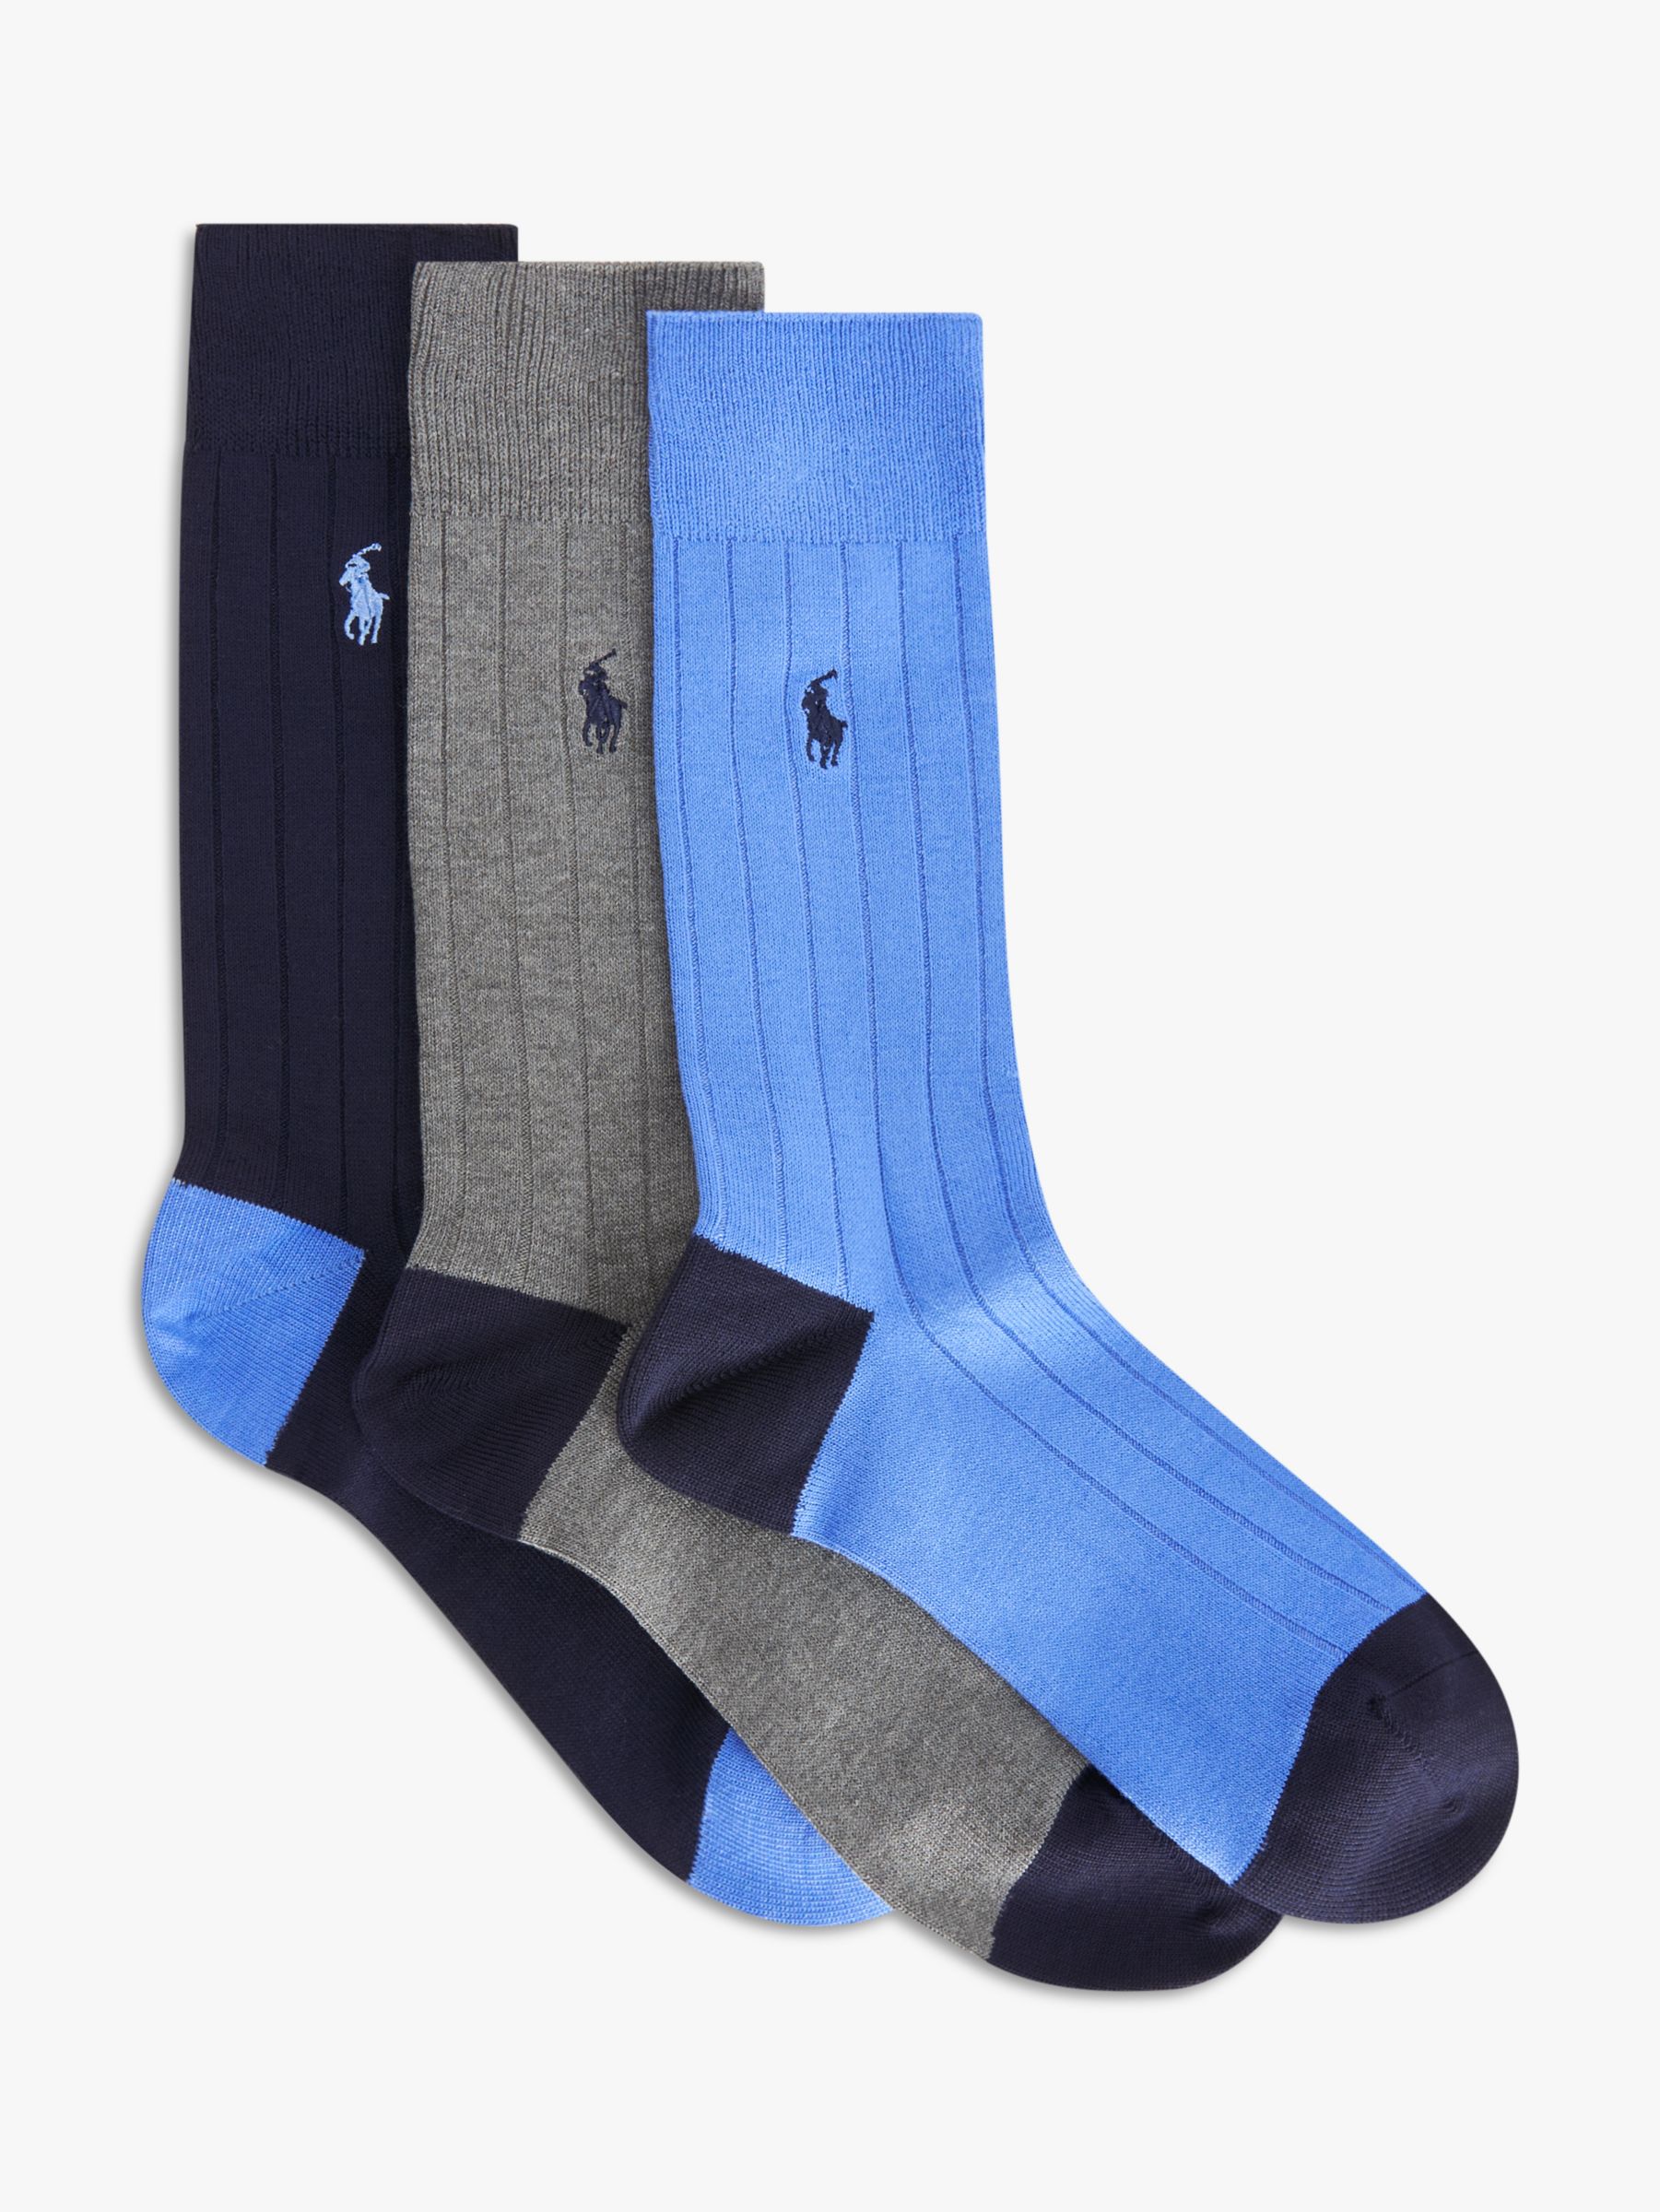 Polo Ralph Lauren Socks for Women, Online Sale up to 45% off